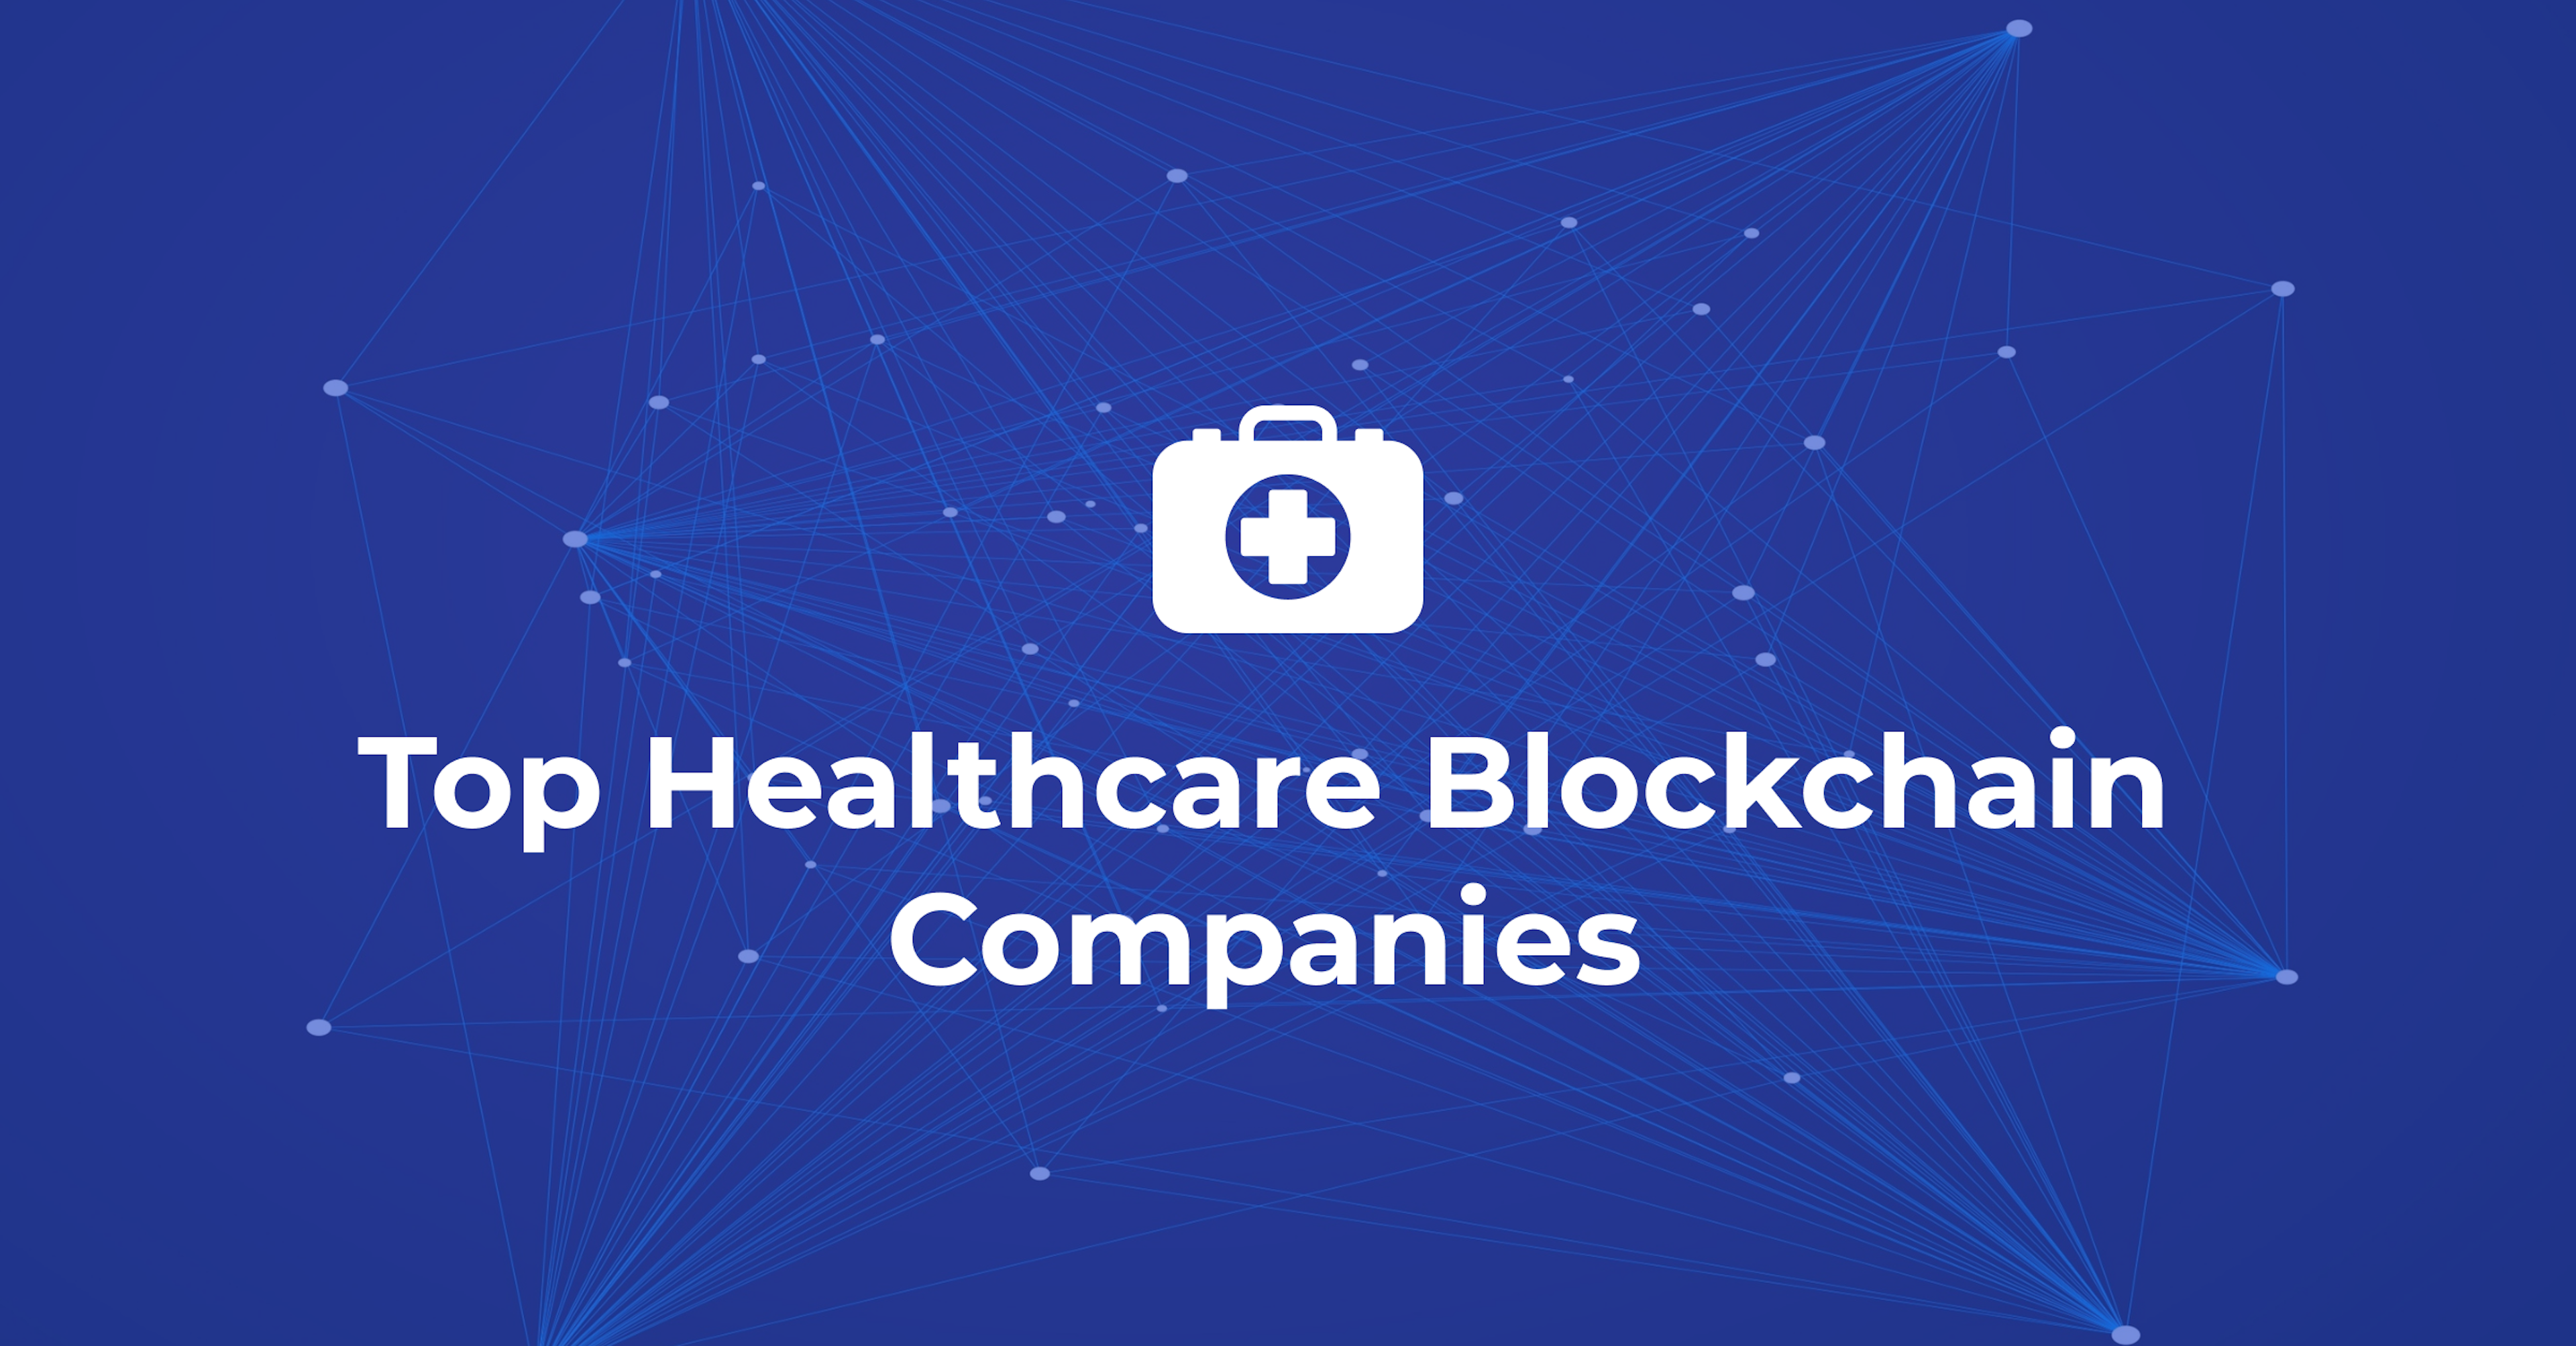 Top Healthcare Blockchain Companies in 2022